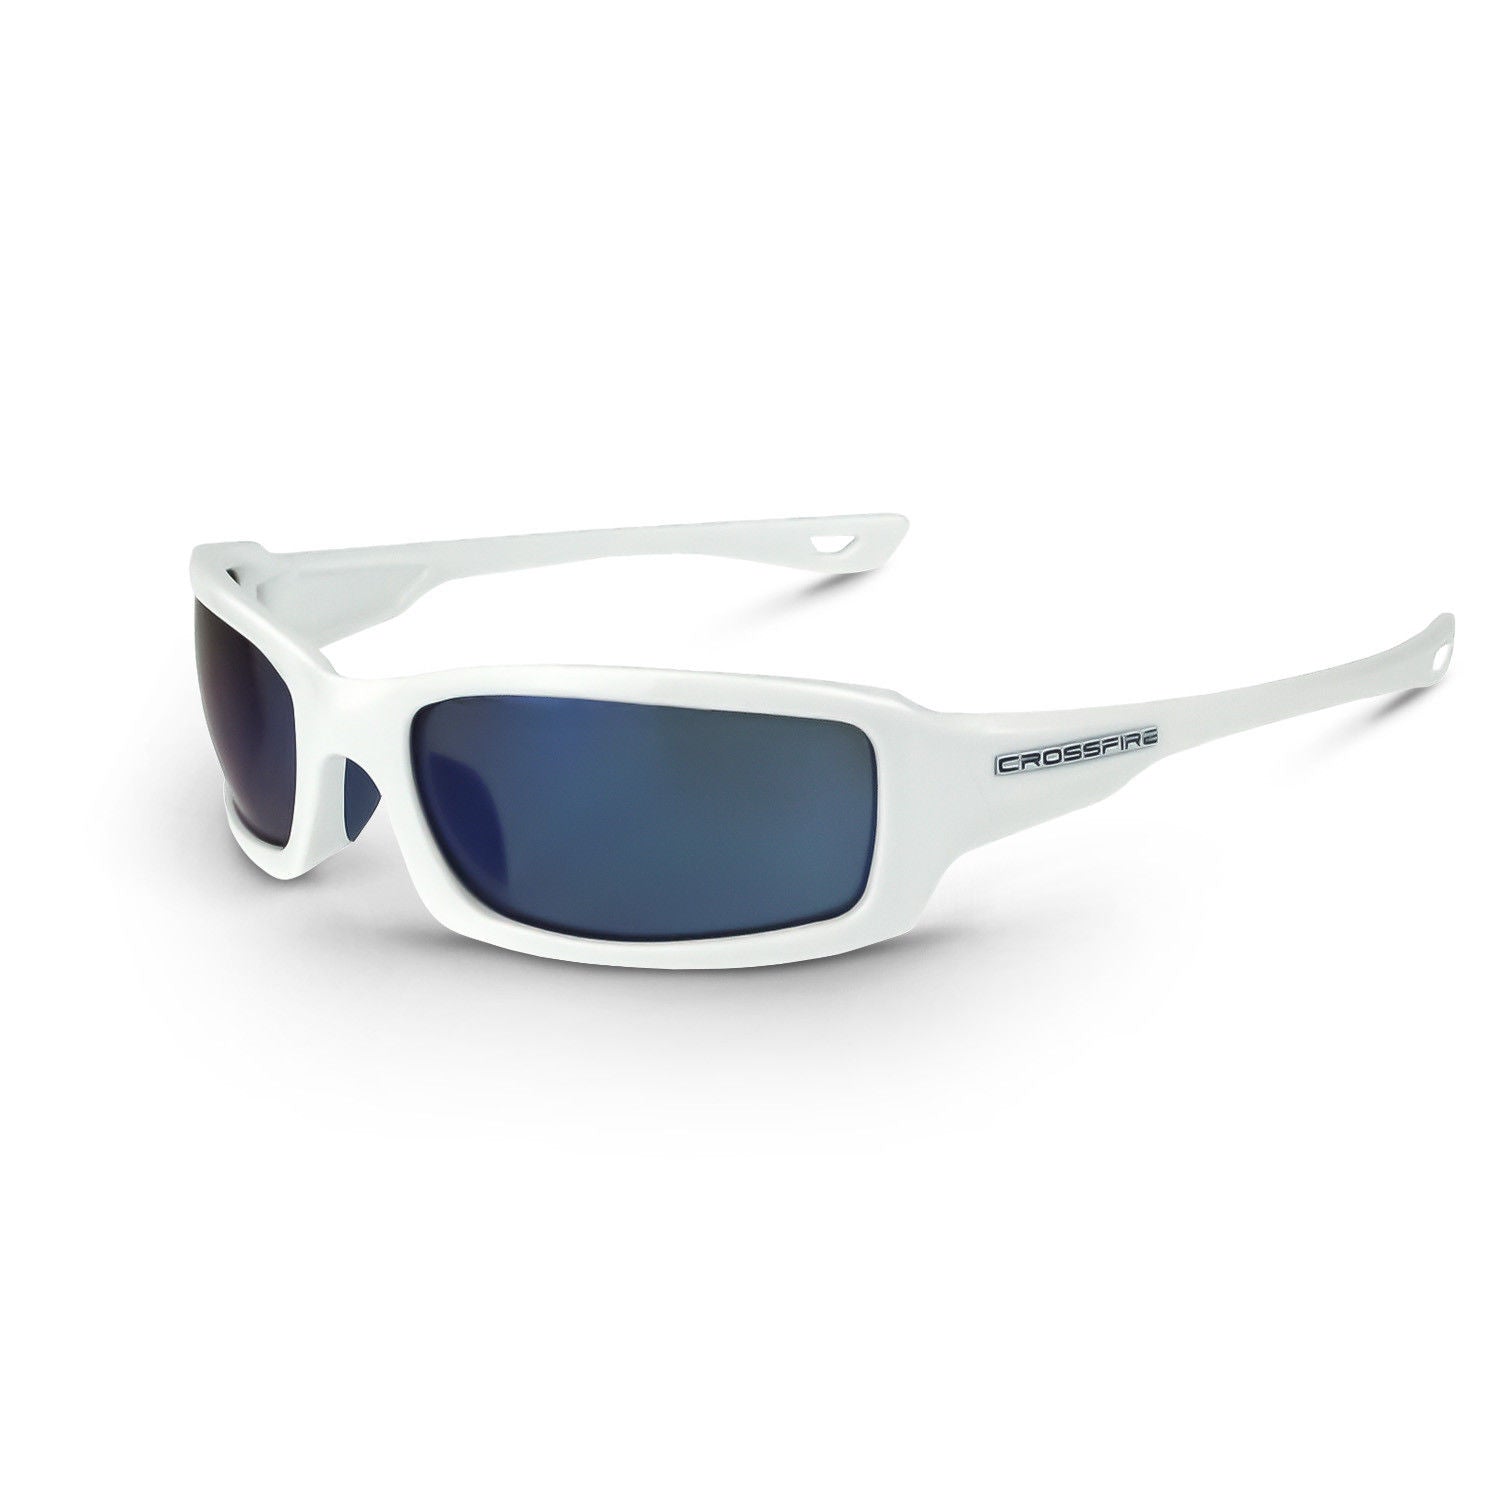 CROSSFIRE M6A Premium Safety Glasses White Frames Blue Mirror Lens 202